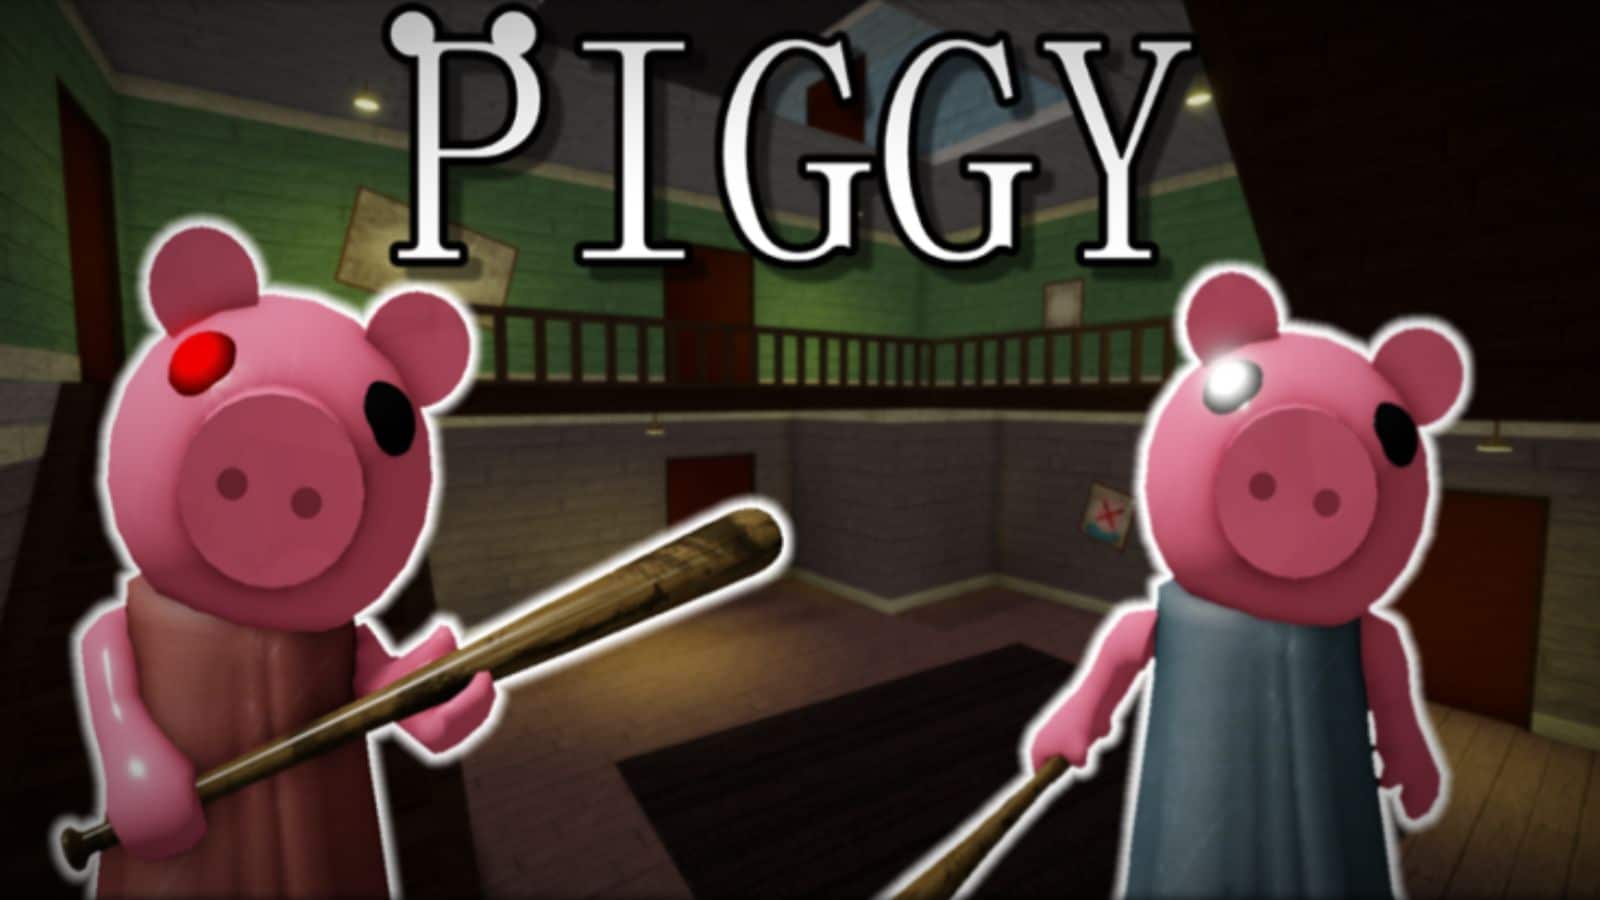 Player vs Bot in Roblox Piggy 